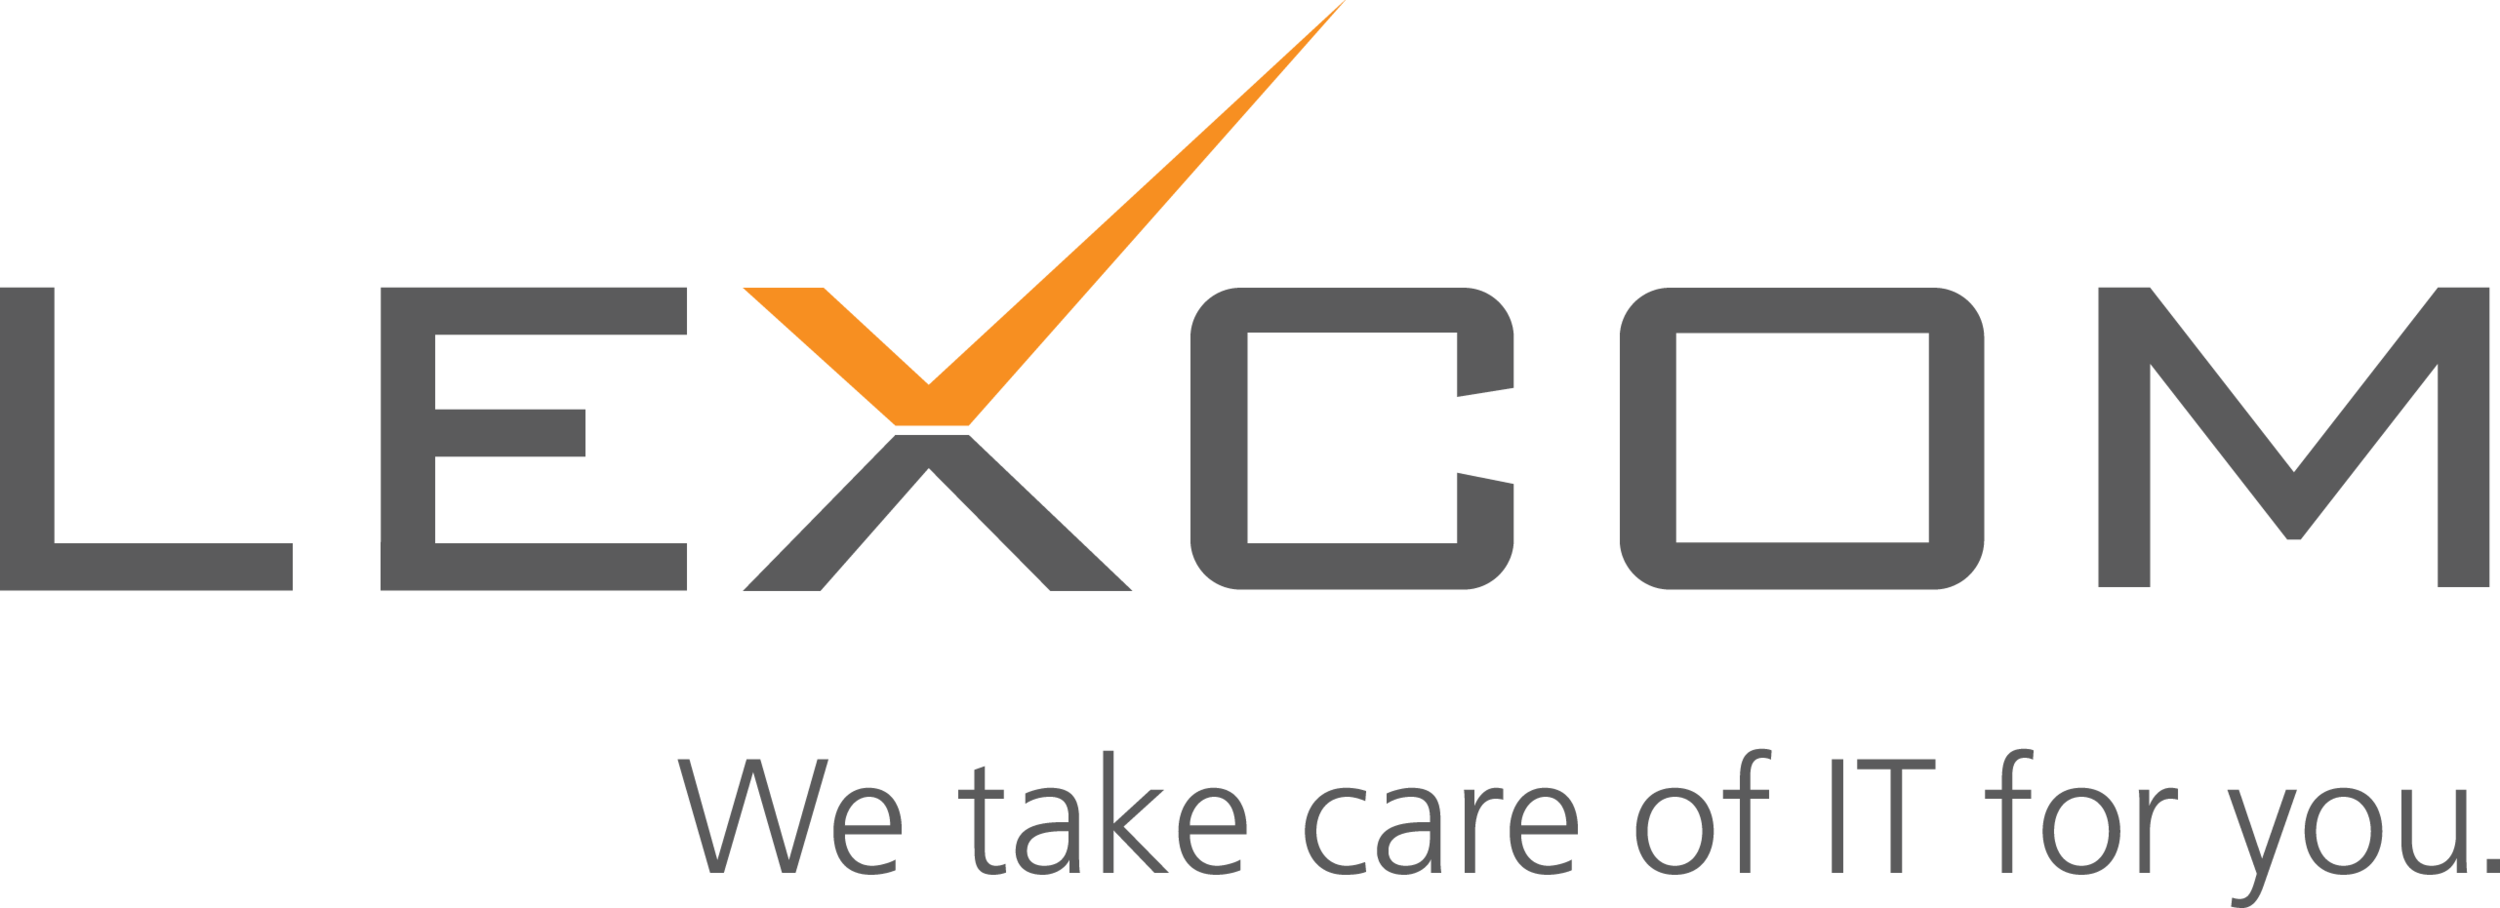 Lexcom-logo-2c (002).png